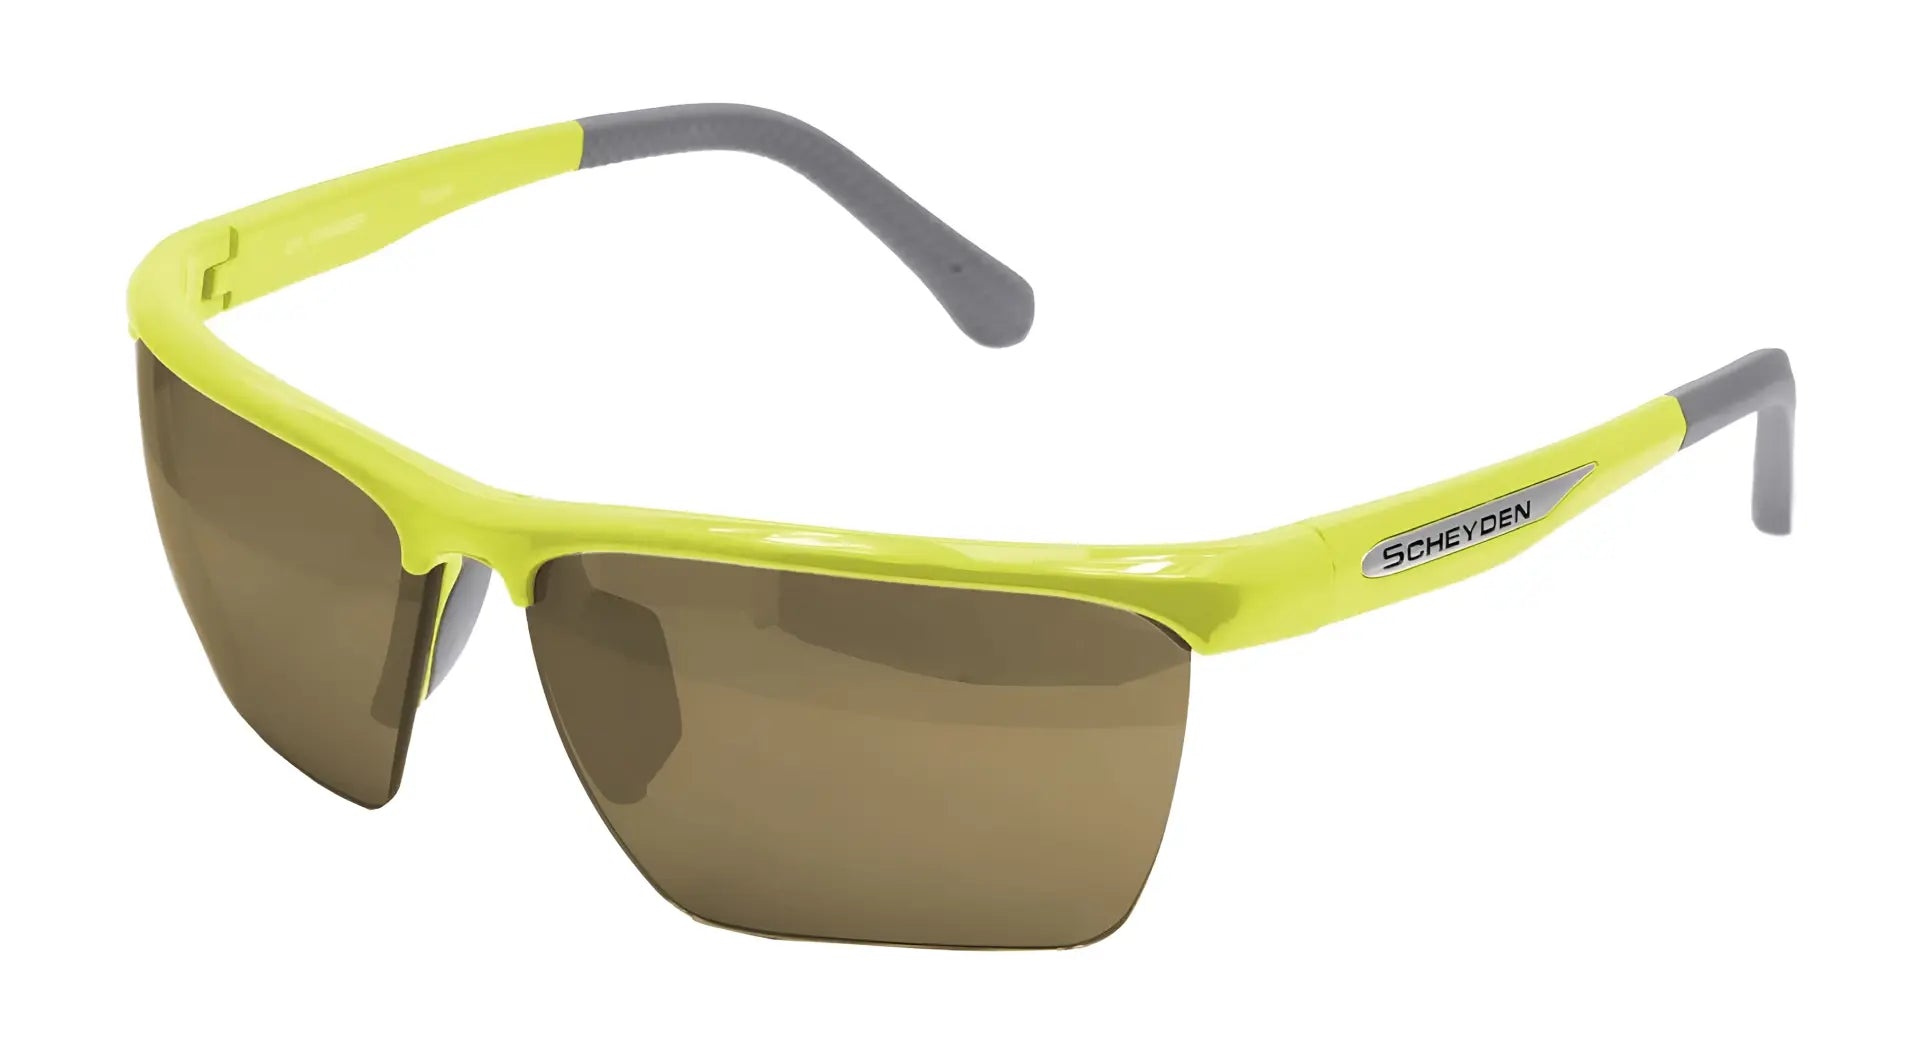 Scheyden CIA Grabber Sunglasses 179 / Neon Yellow